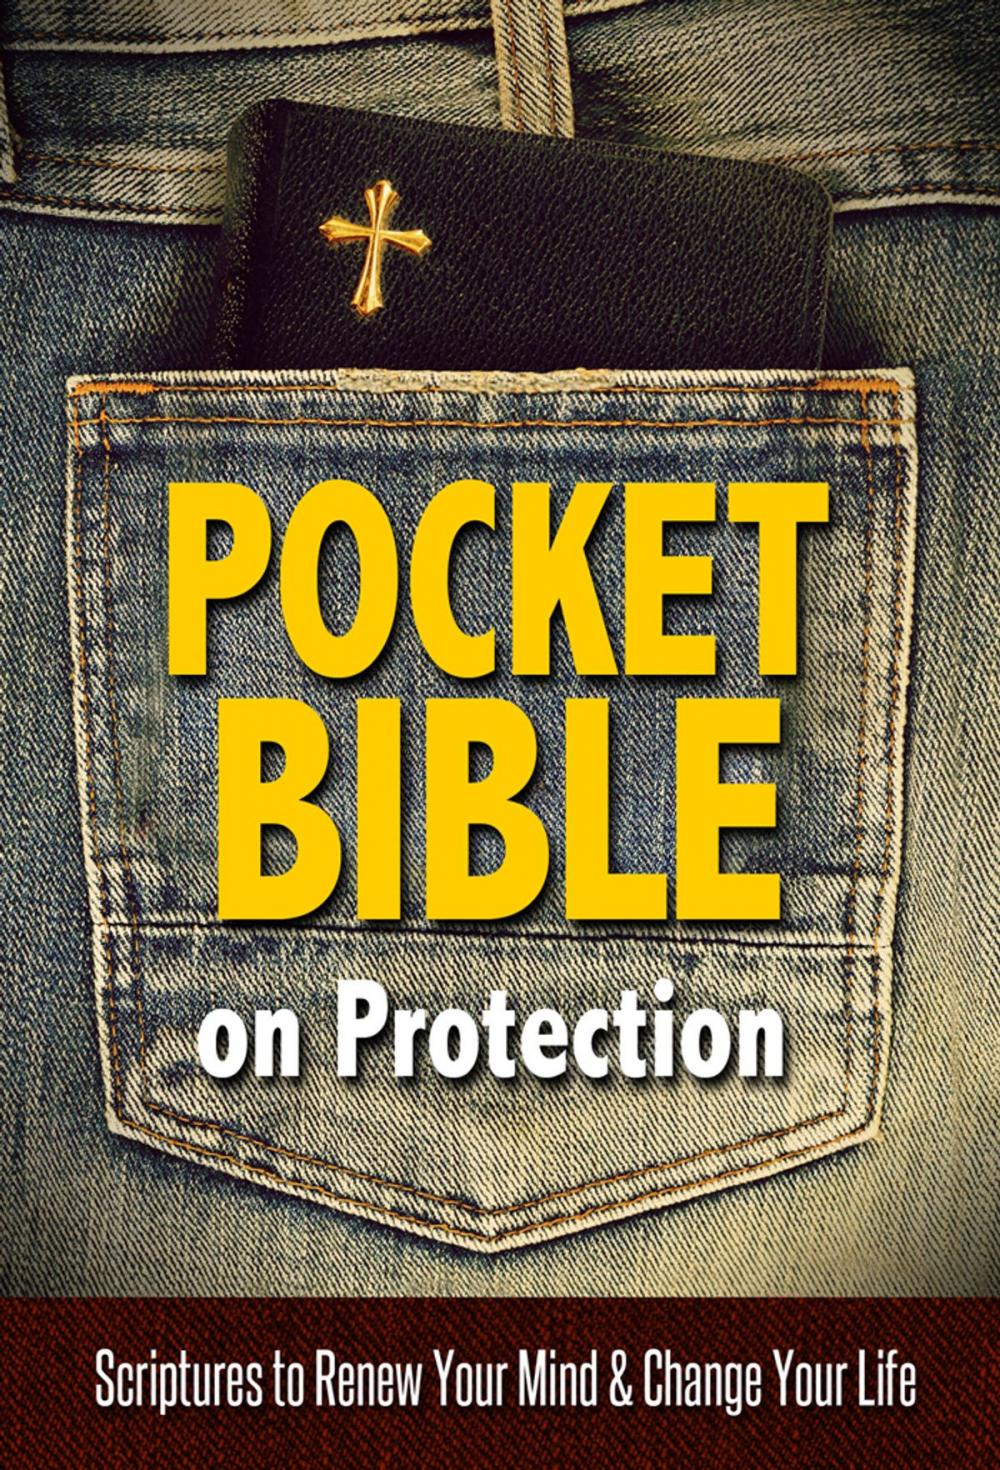 Big bigCover of Pocket Bible on Protection